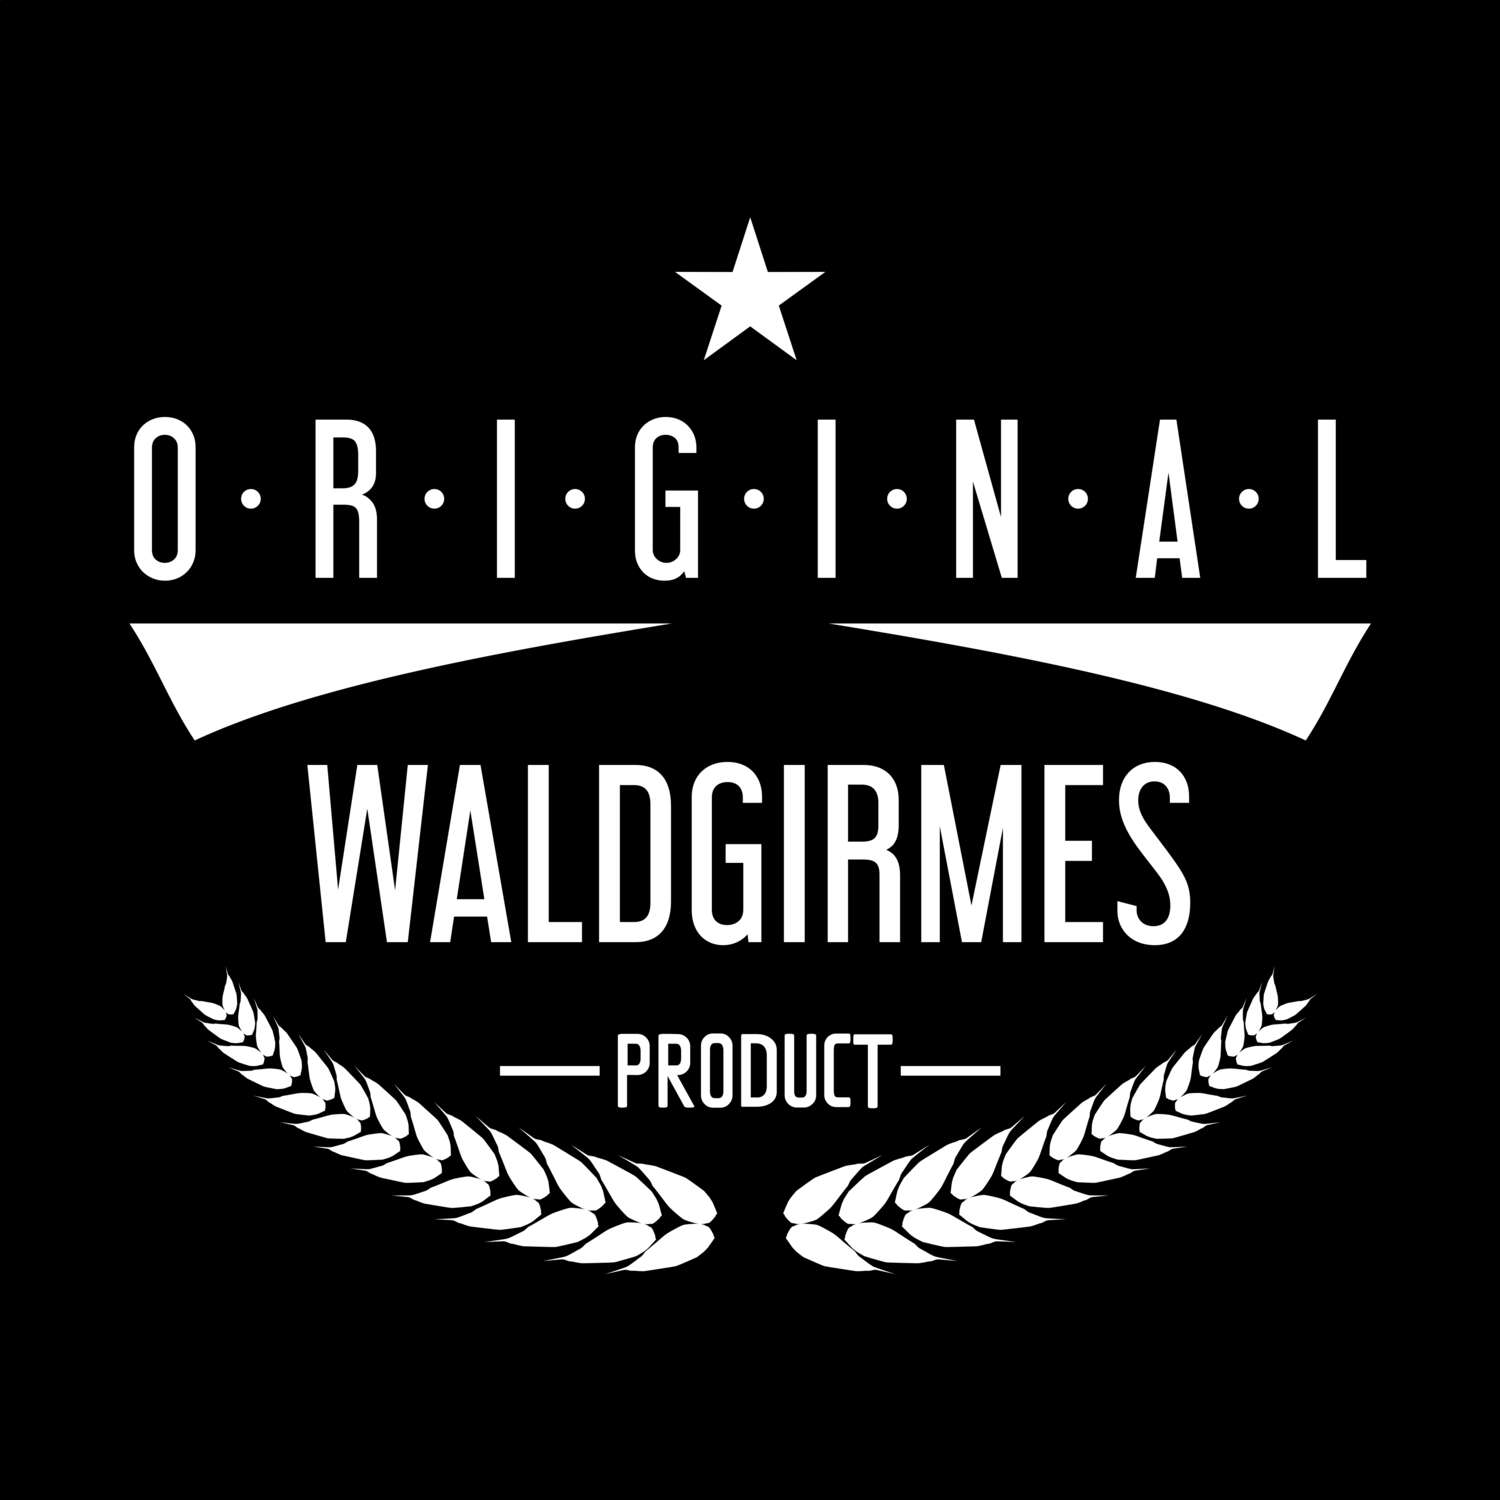 Waldgirmes T-Shirt »Original Product«